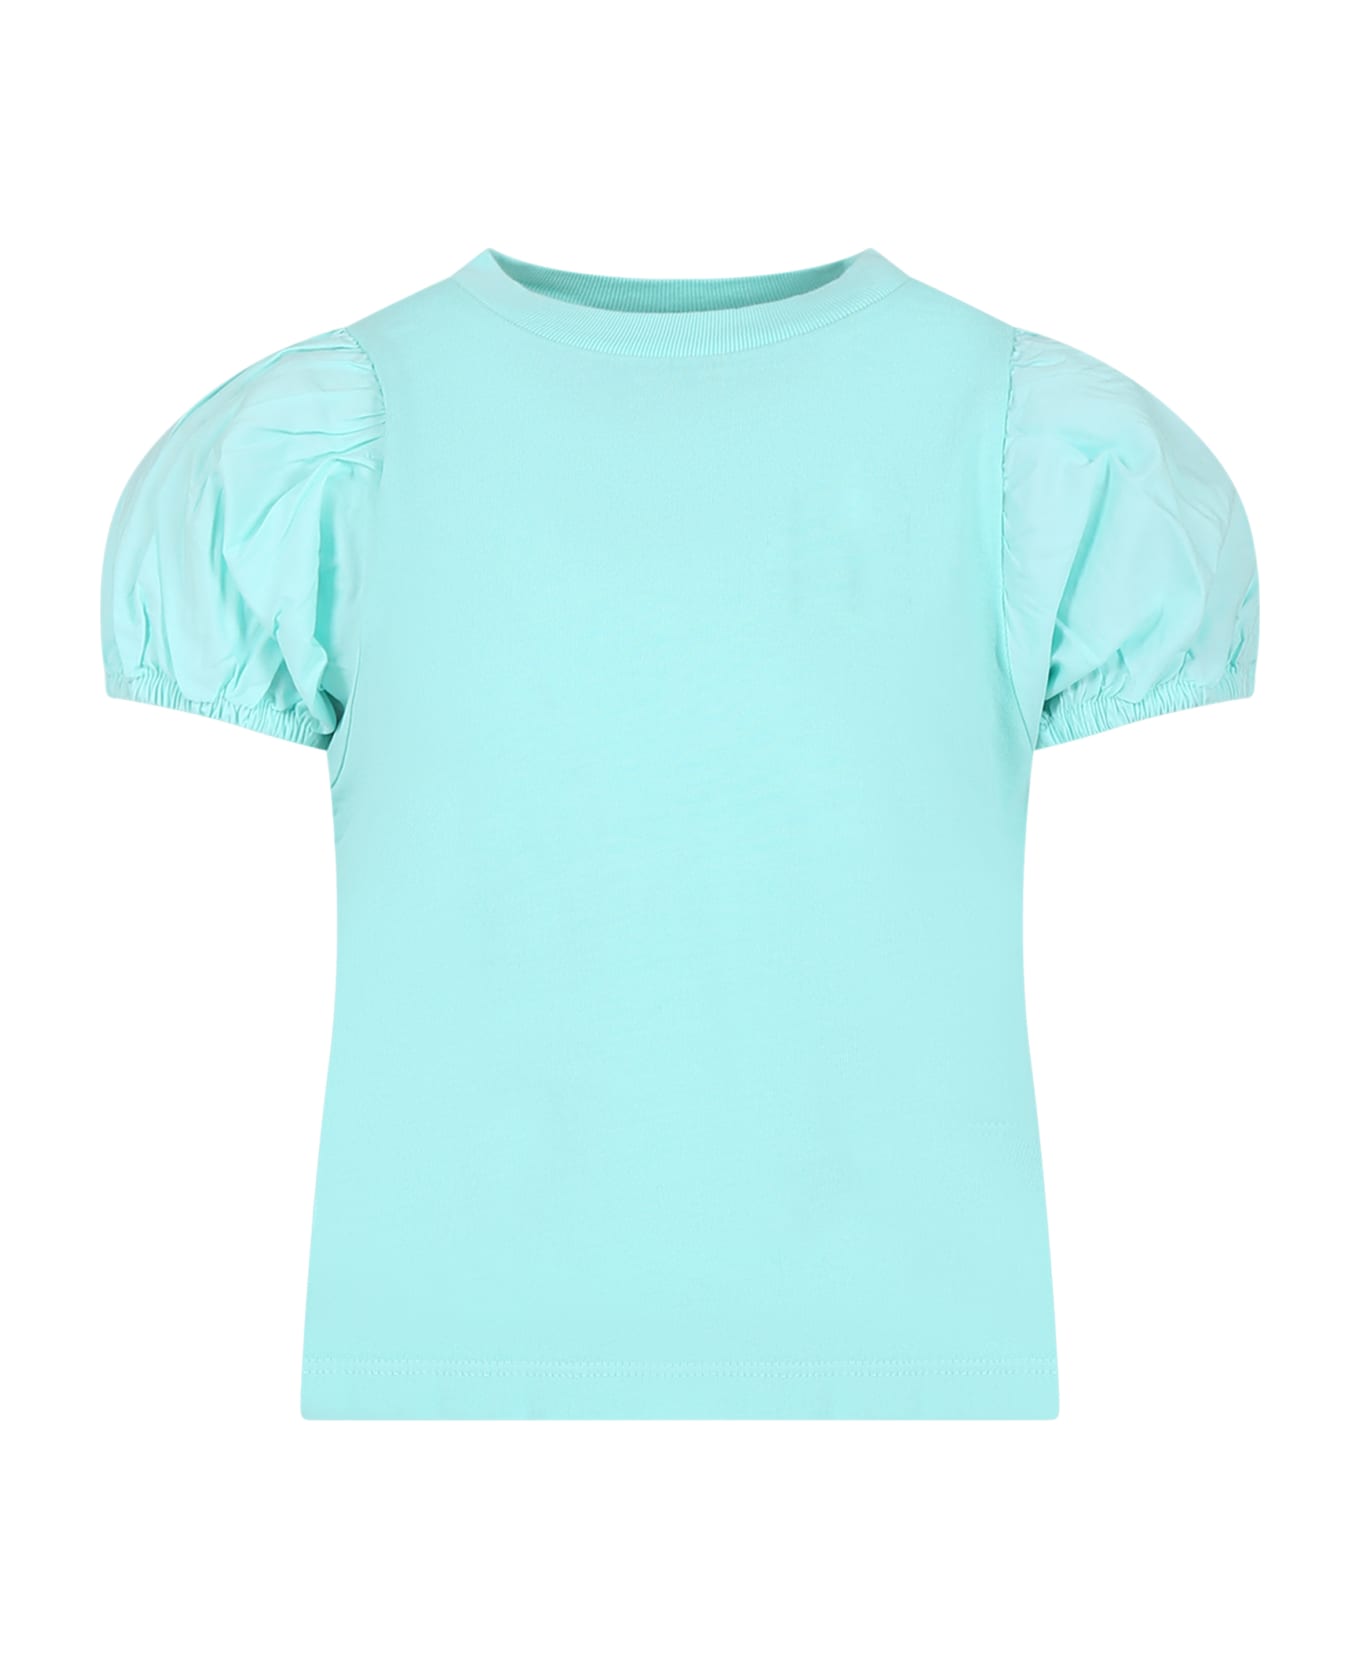 Molo Light Blue T-shirt For Girl With Print - Light Blue